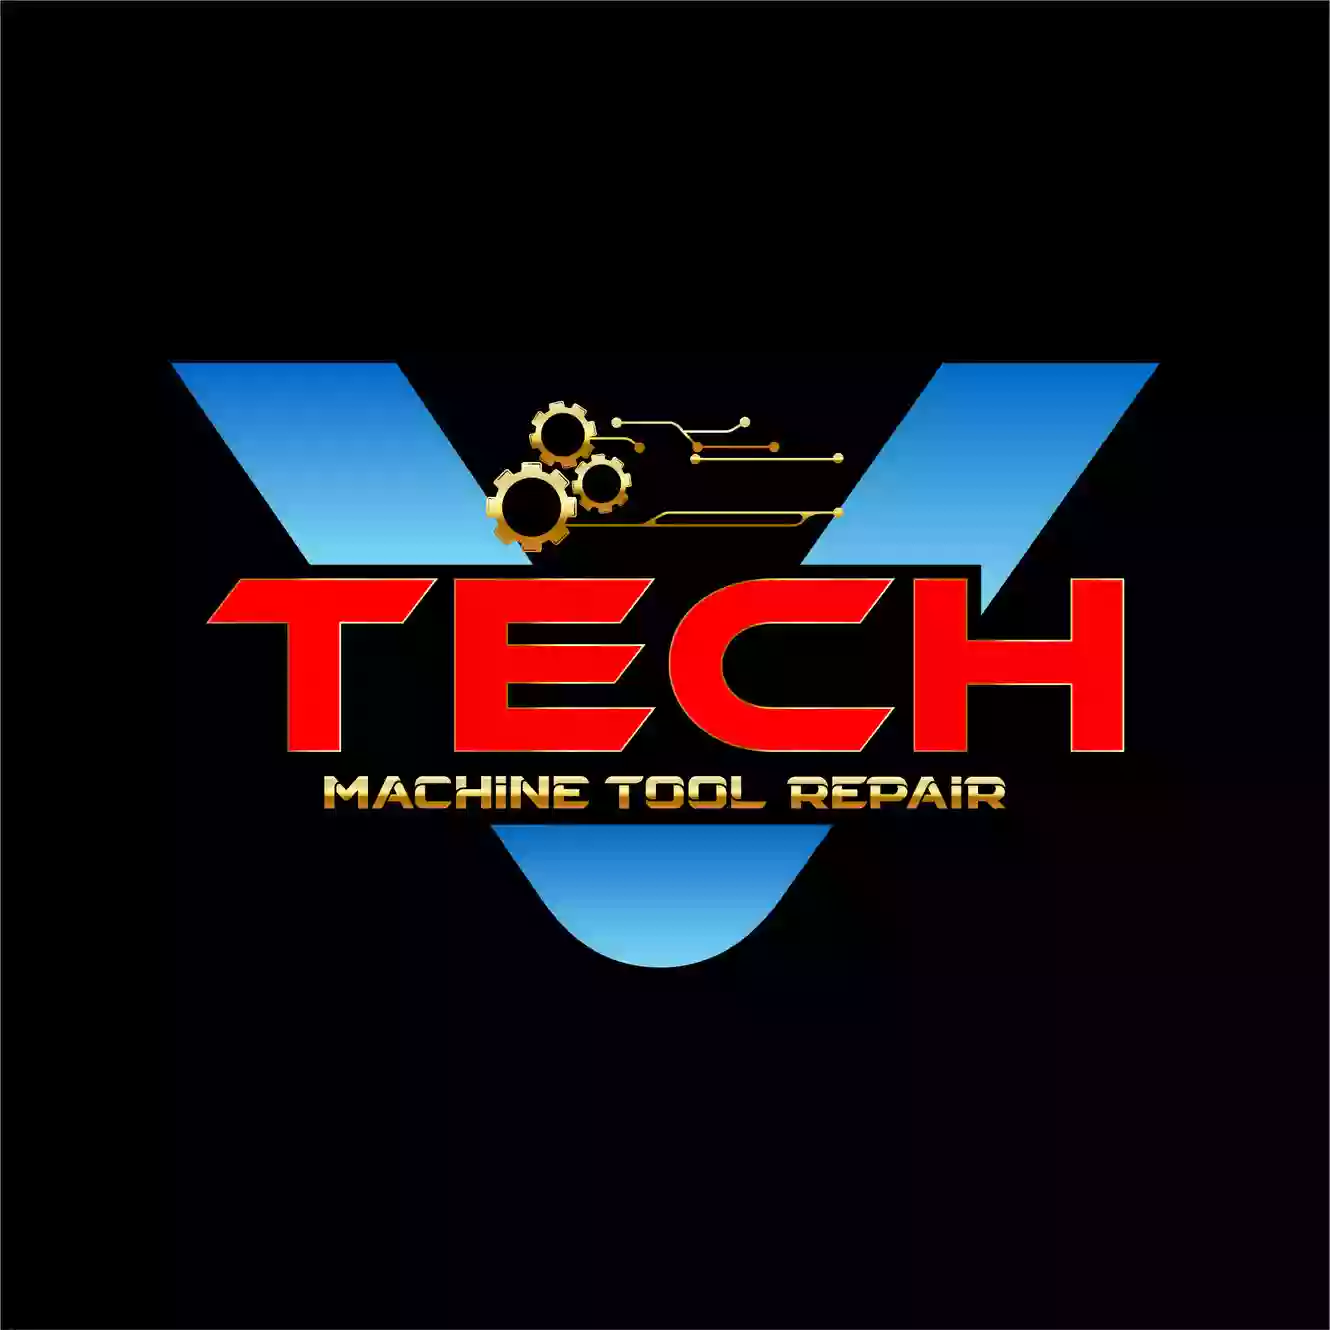 Vtech machine tool repair